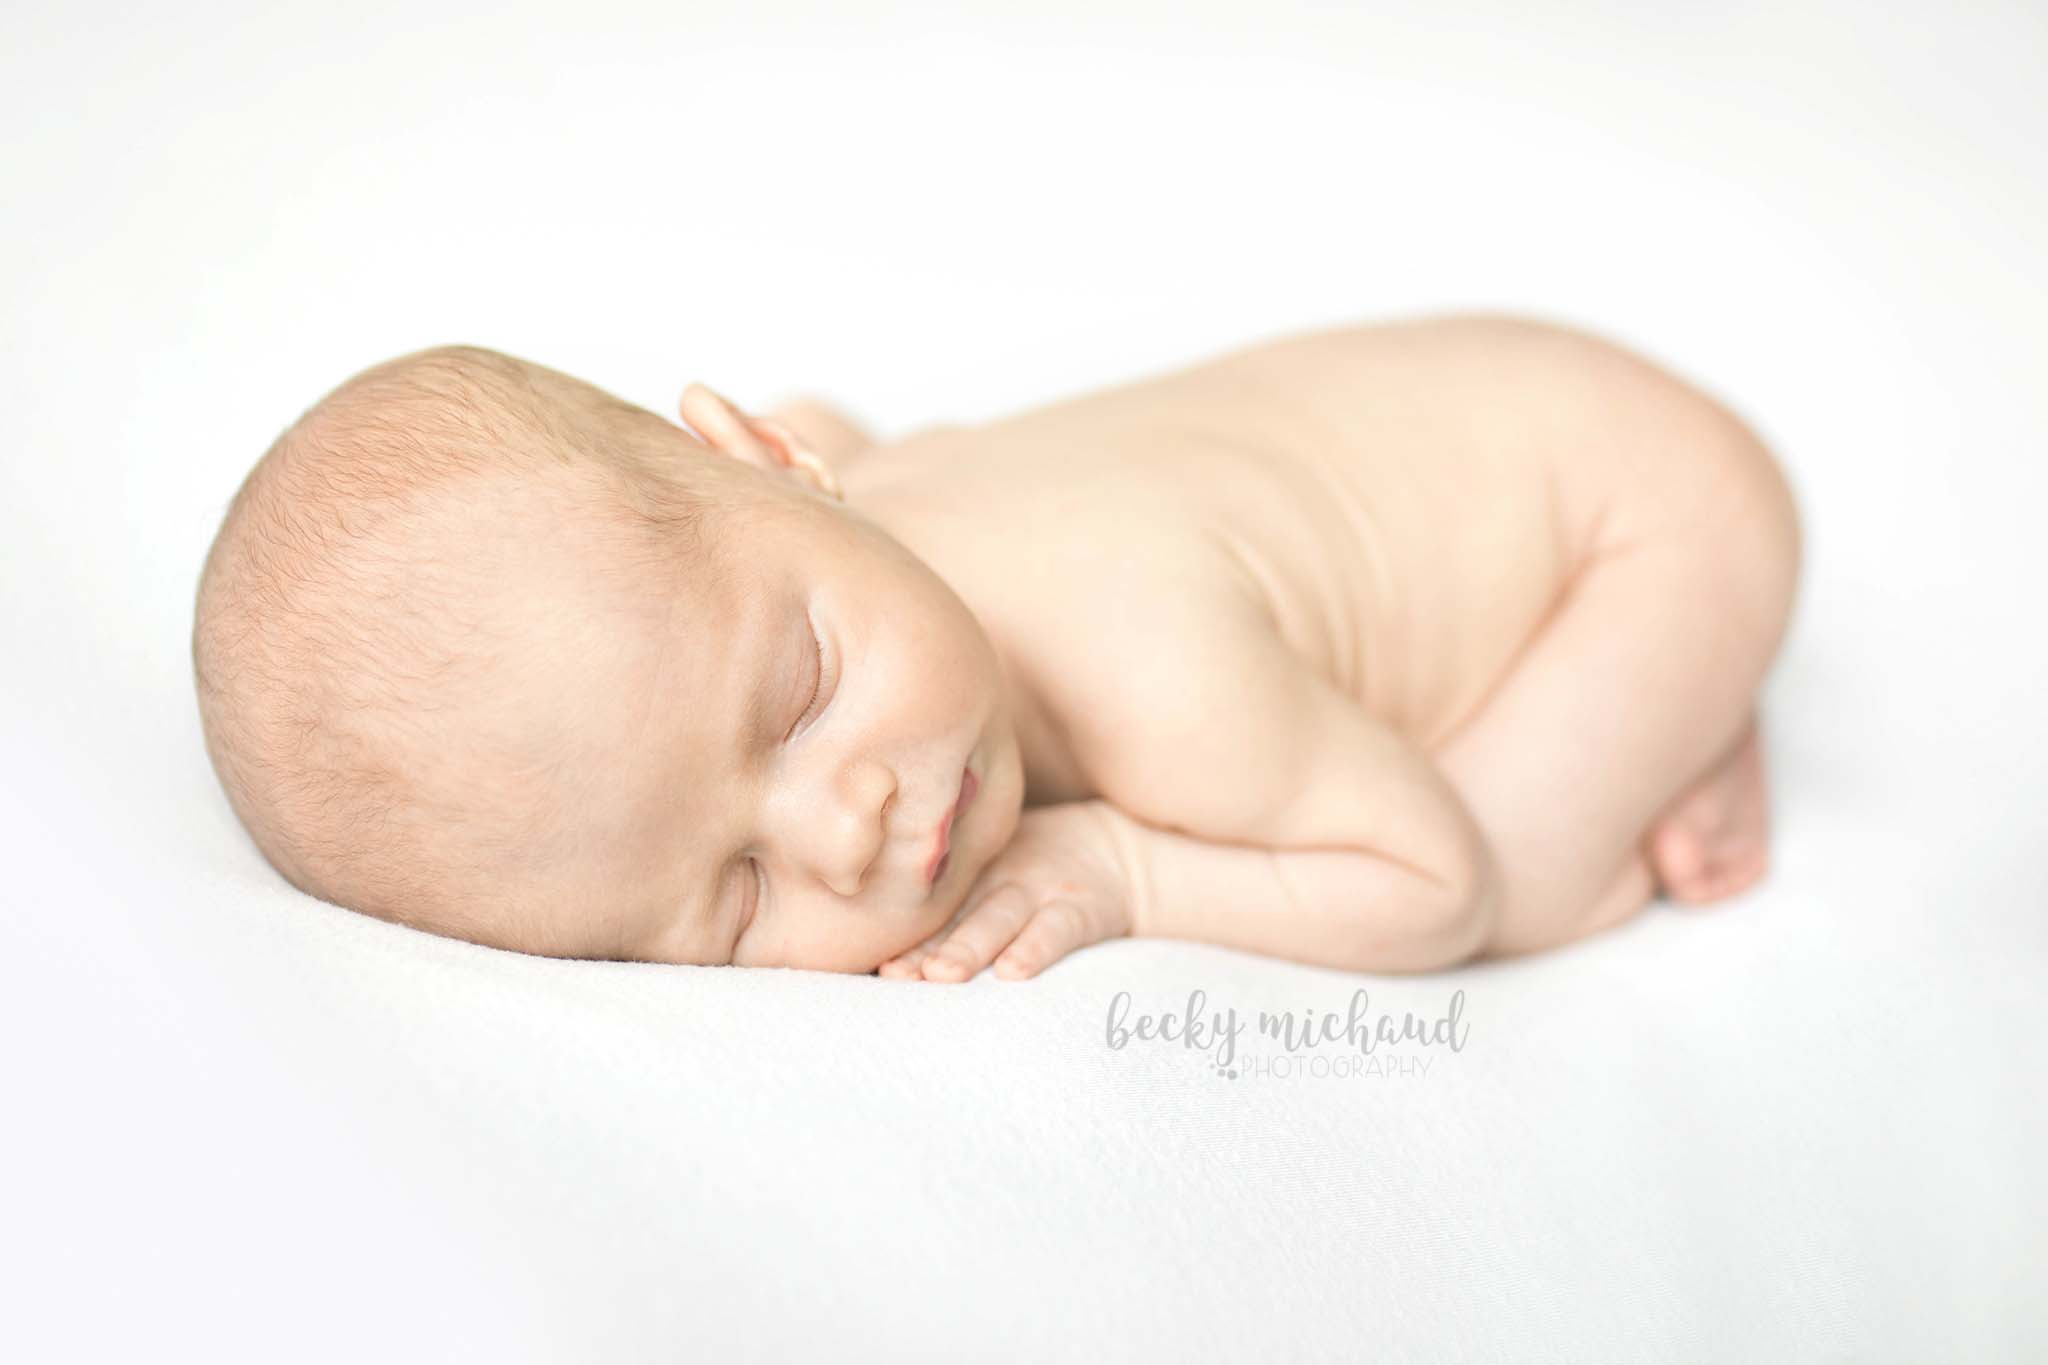 simple minimalist newborn portrait taken by Becky Michaud, Fort COllins photographer